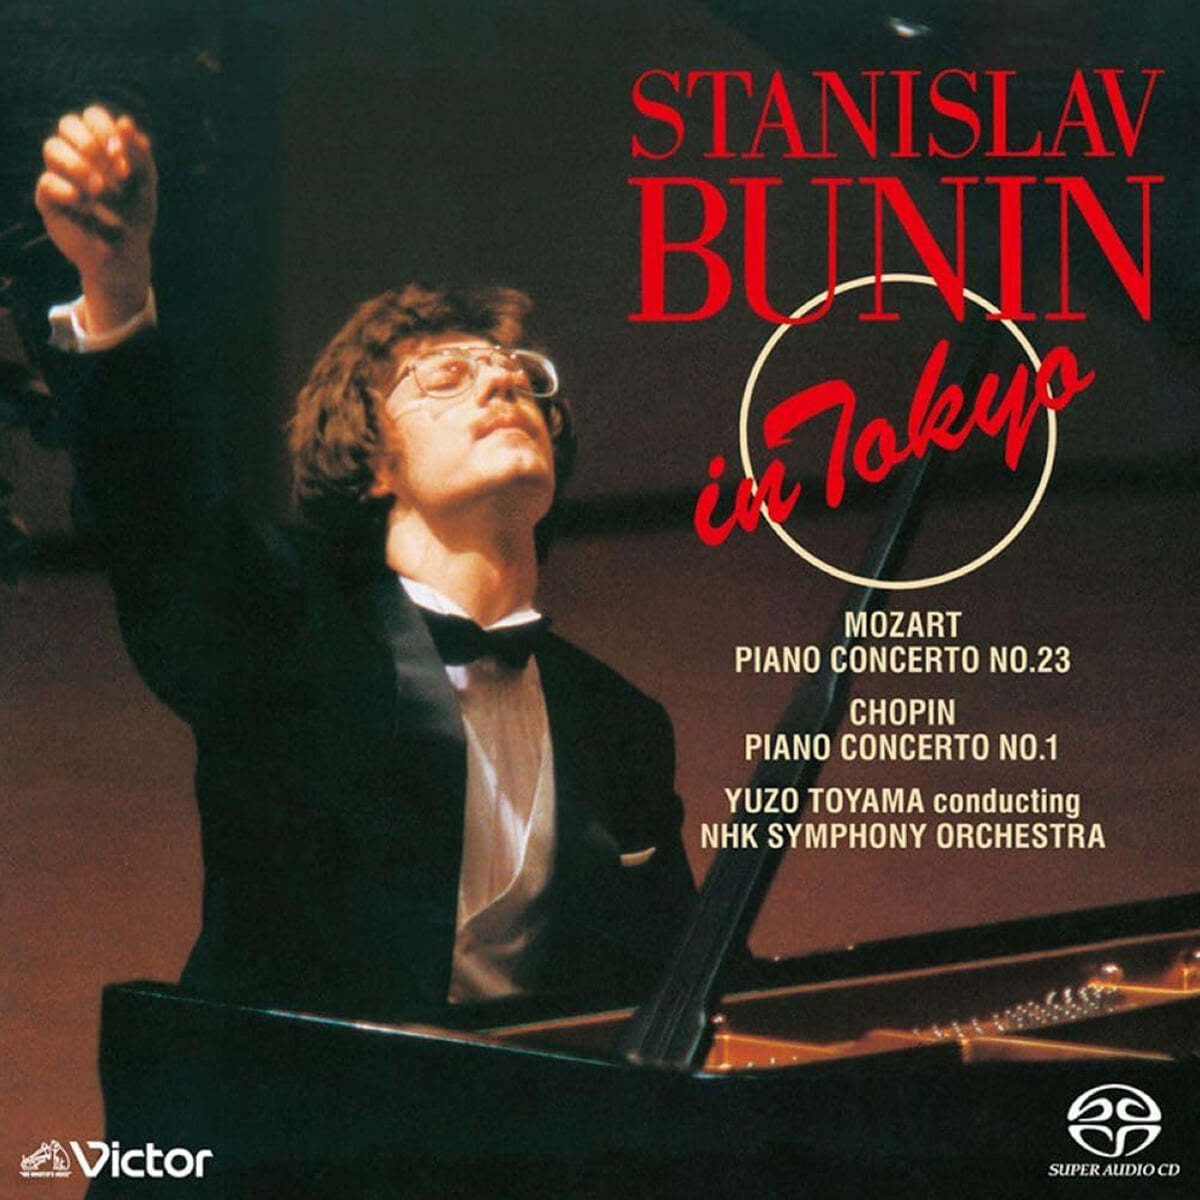 Stanislav Bunin 모차르트: 피아노 협주곡 23번 / 쇼팽: 피아노 협주곡 1번 (Mozart: Piano Concerto No. 23 / Chopin: Piano Concerto No. 1) 